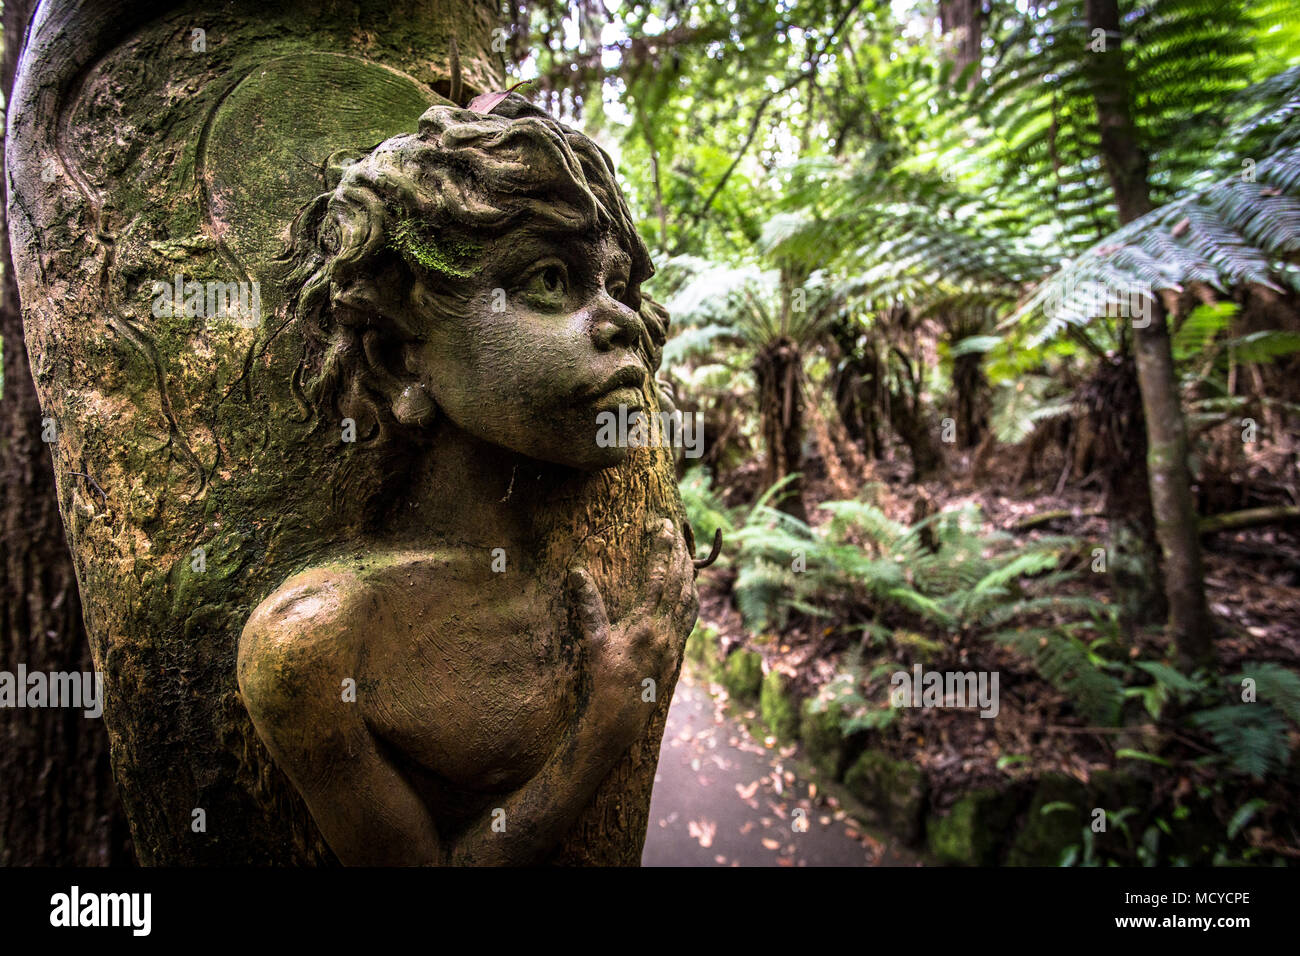 Figurine in forest of Dandenong mountain ranges of Melbourne Australia William Ricketts Australasia Stock Photo